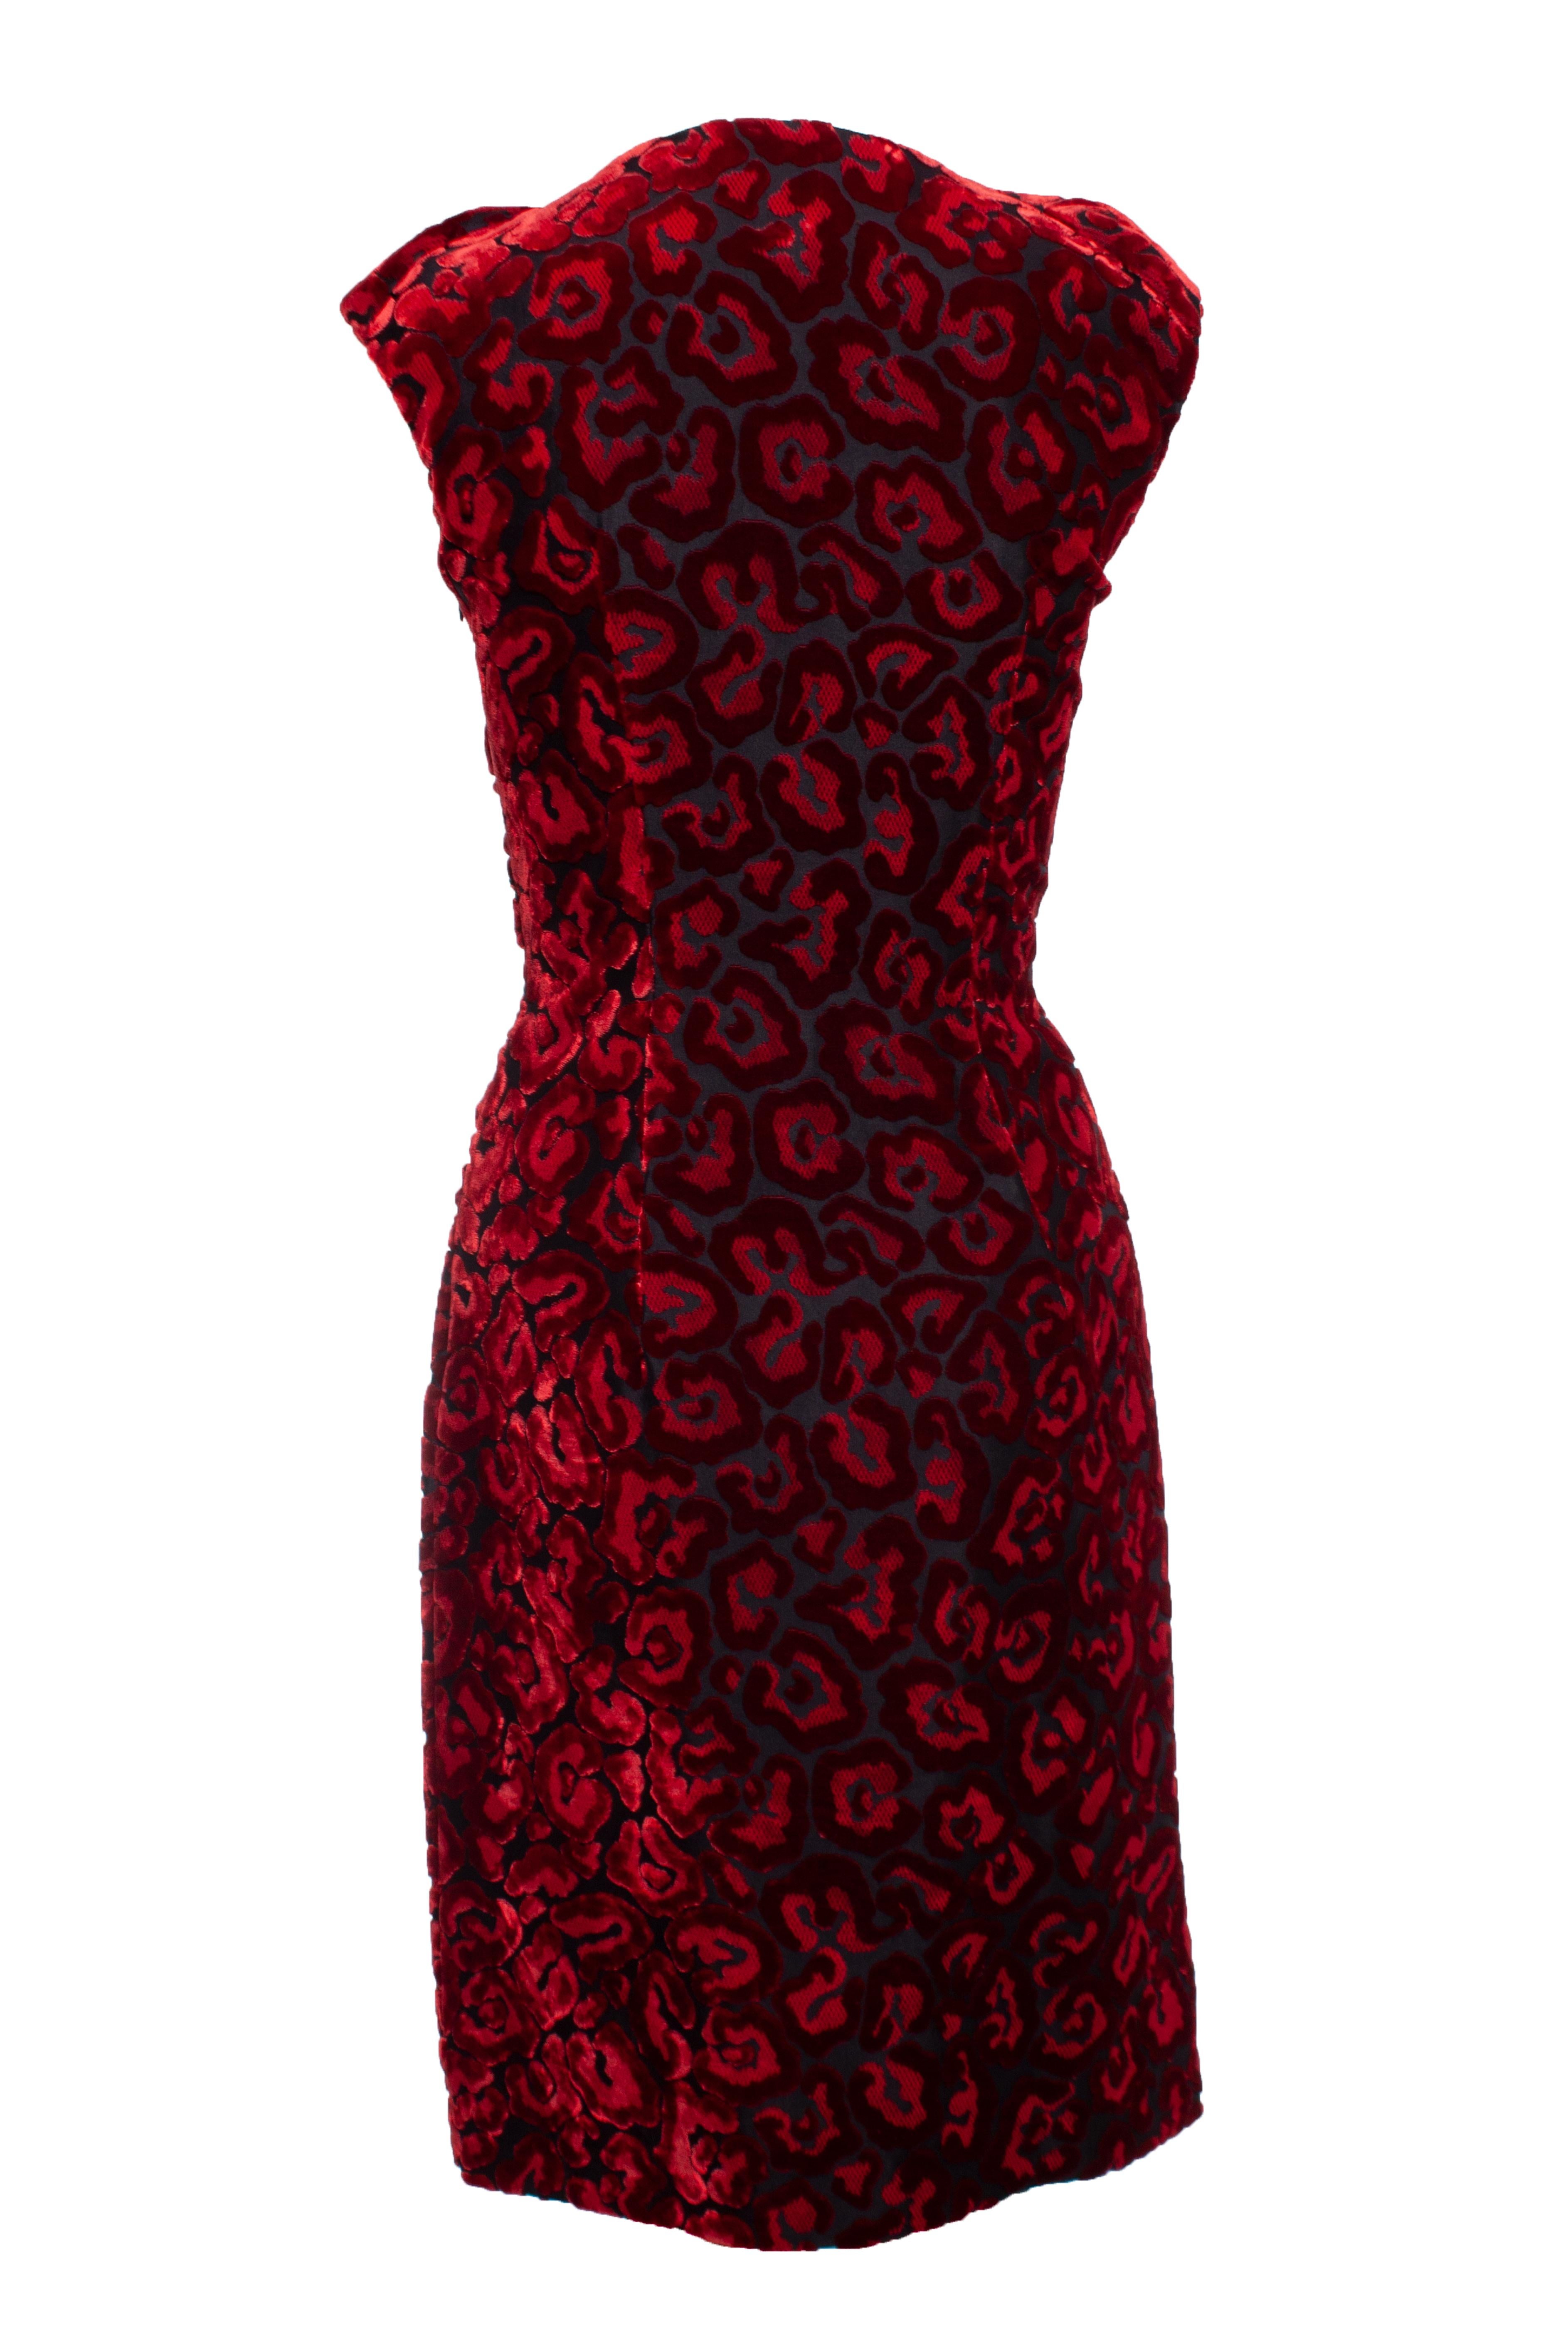 Prada, red velvet dress. The item is in very good condition.

• CONDITION: very good condition 

• SIZE: IT40 - XS 

• MEASUREMENTS: length 99 cm, width 43 cm, waist 34 cm

• MATERIAL: velvet jacquard 

• CARE: dry cleaning 

• COLOR: red 